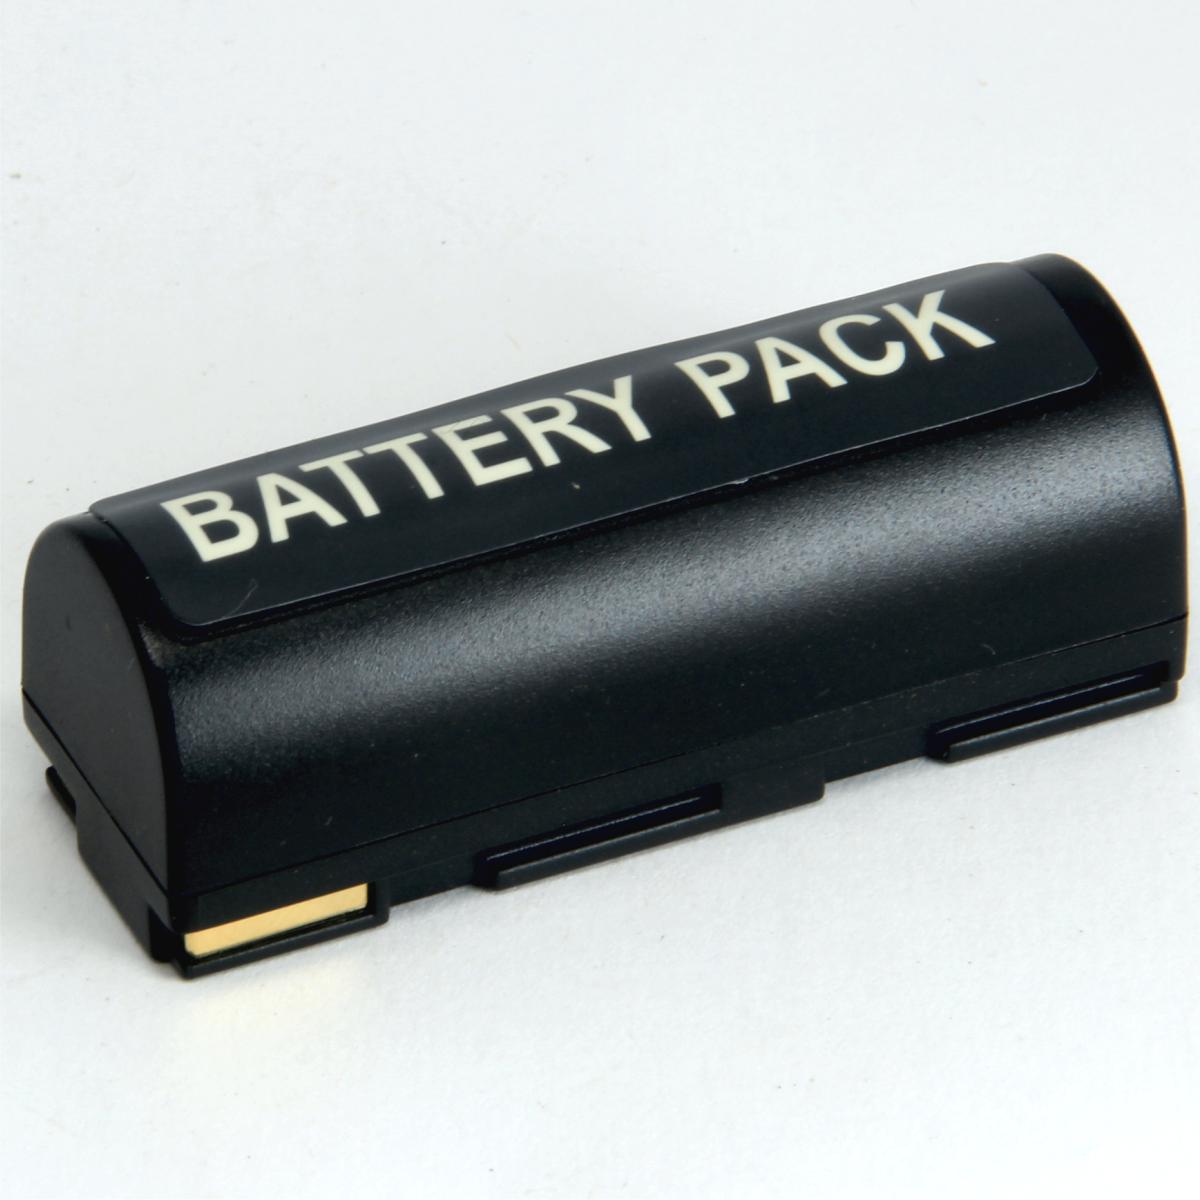 Bateria NP-80 para FujiFilm FinePix 1700z, 2700, MX-1700, MX-2900, MX-4800